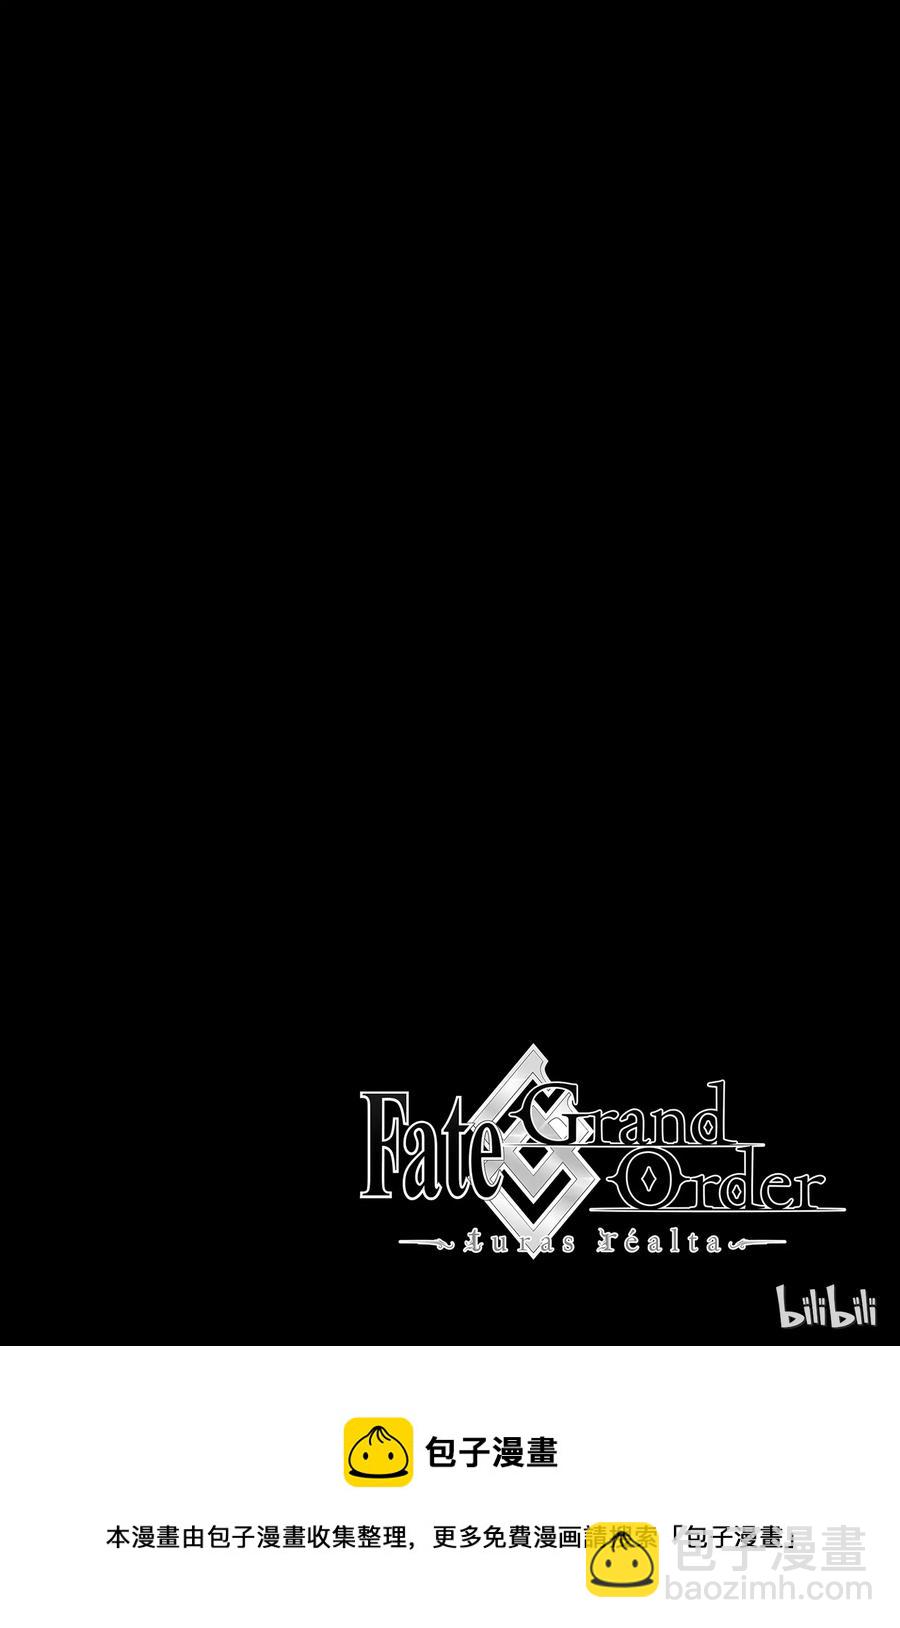 Fate/Grand Order-turas realta- - 13 第一特異點?終章① - 6